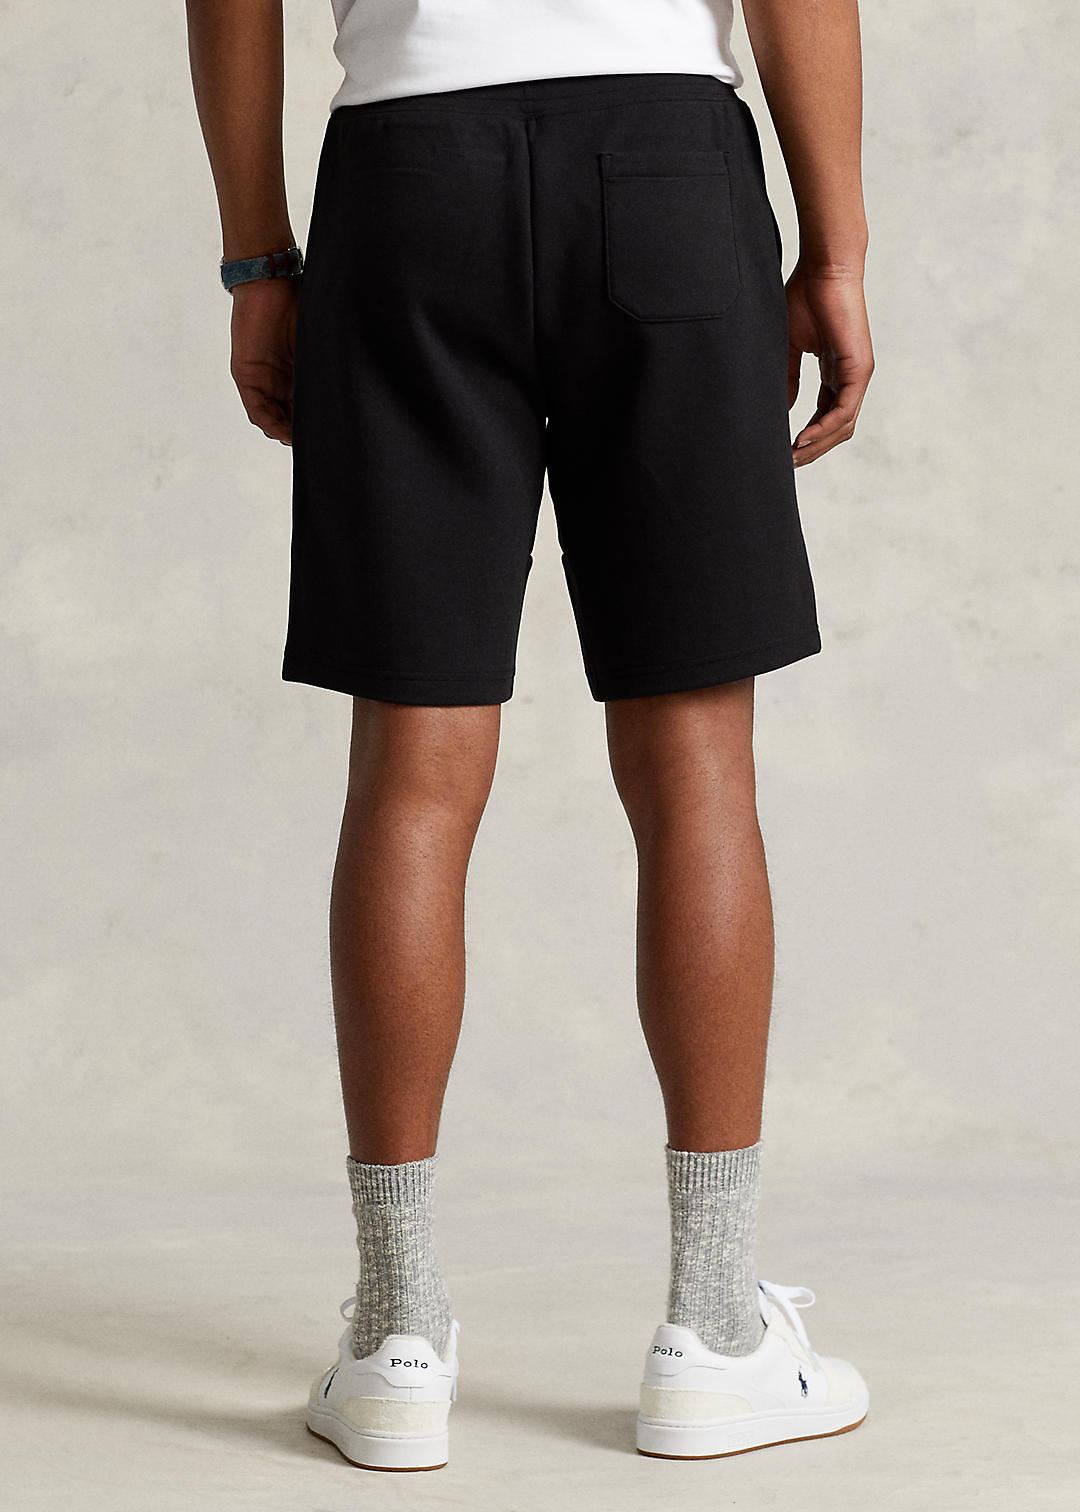 Polo Ralph Lauren Double-Knit Short 5